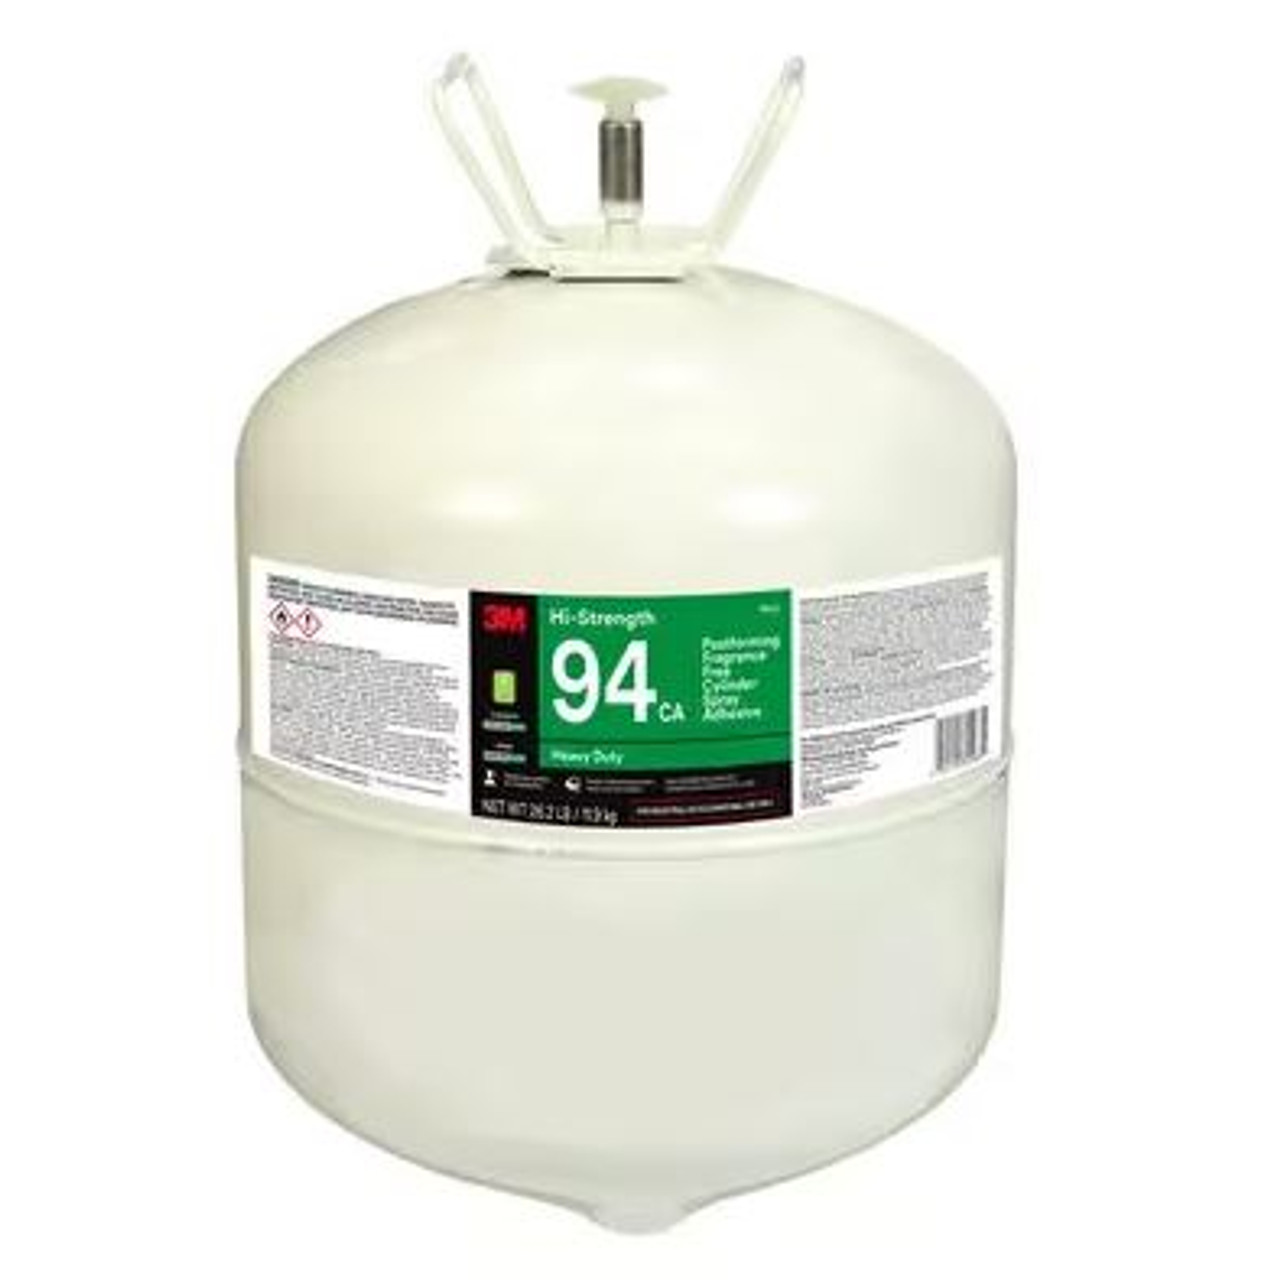 3M™ Hi-Strength Postforming 94 CA Cylinder Spray Adhesive, Red, Large Cylinder (Net Wt 26.2 lb)